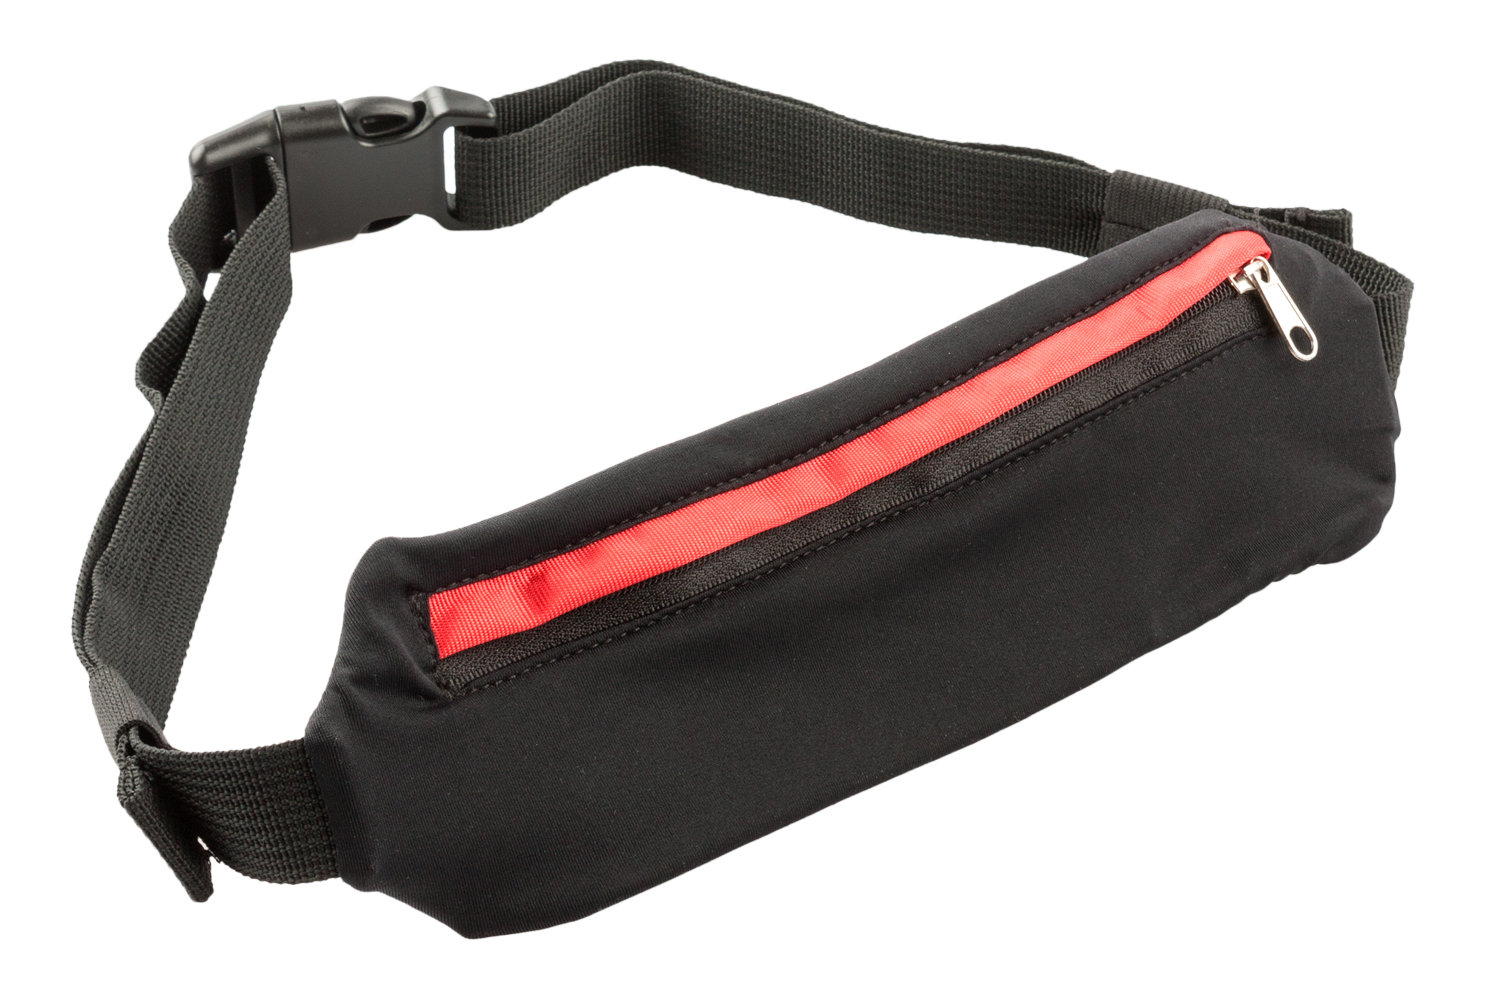 LED belt pouch black red